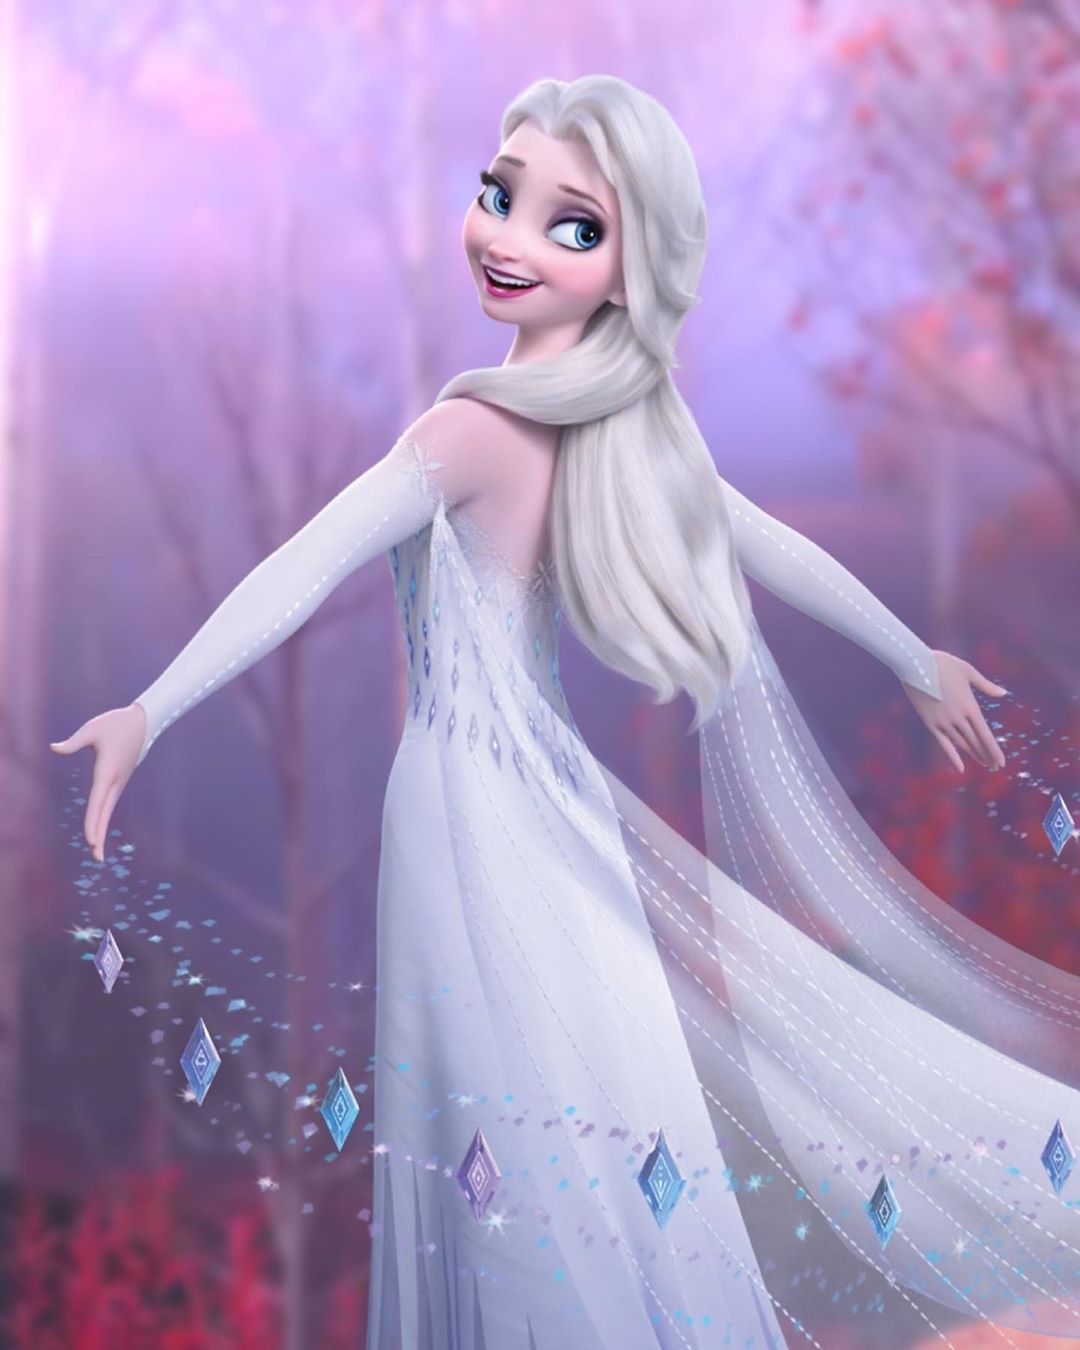 Anna And Elsa Wallpapers - Wallpaper Cave 1A8  Disney background, Frozen  disney movie, Fantasy castle